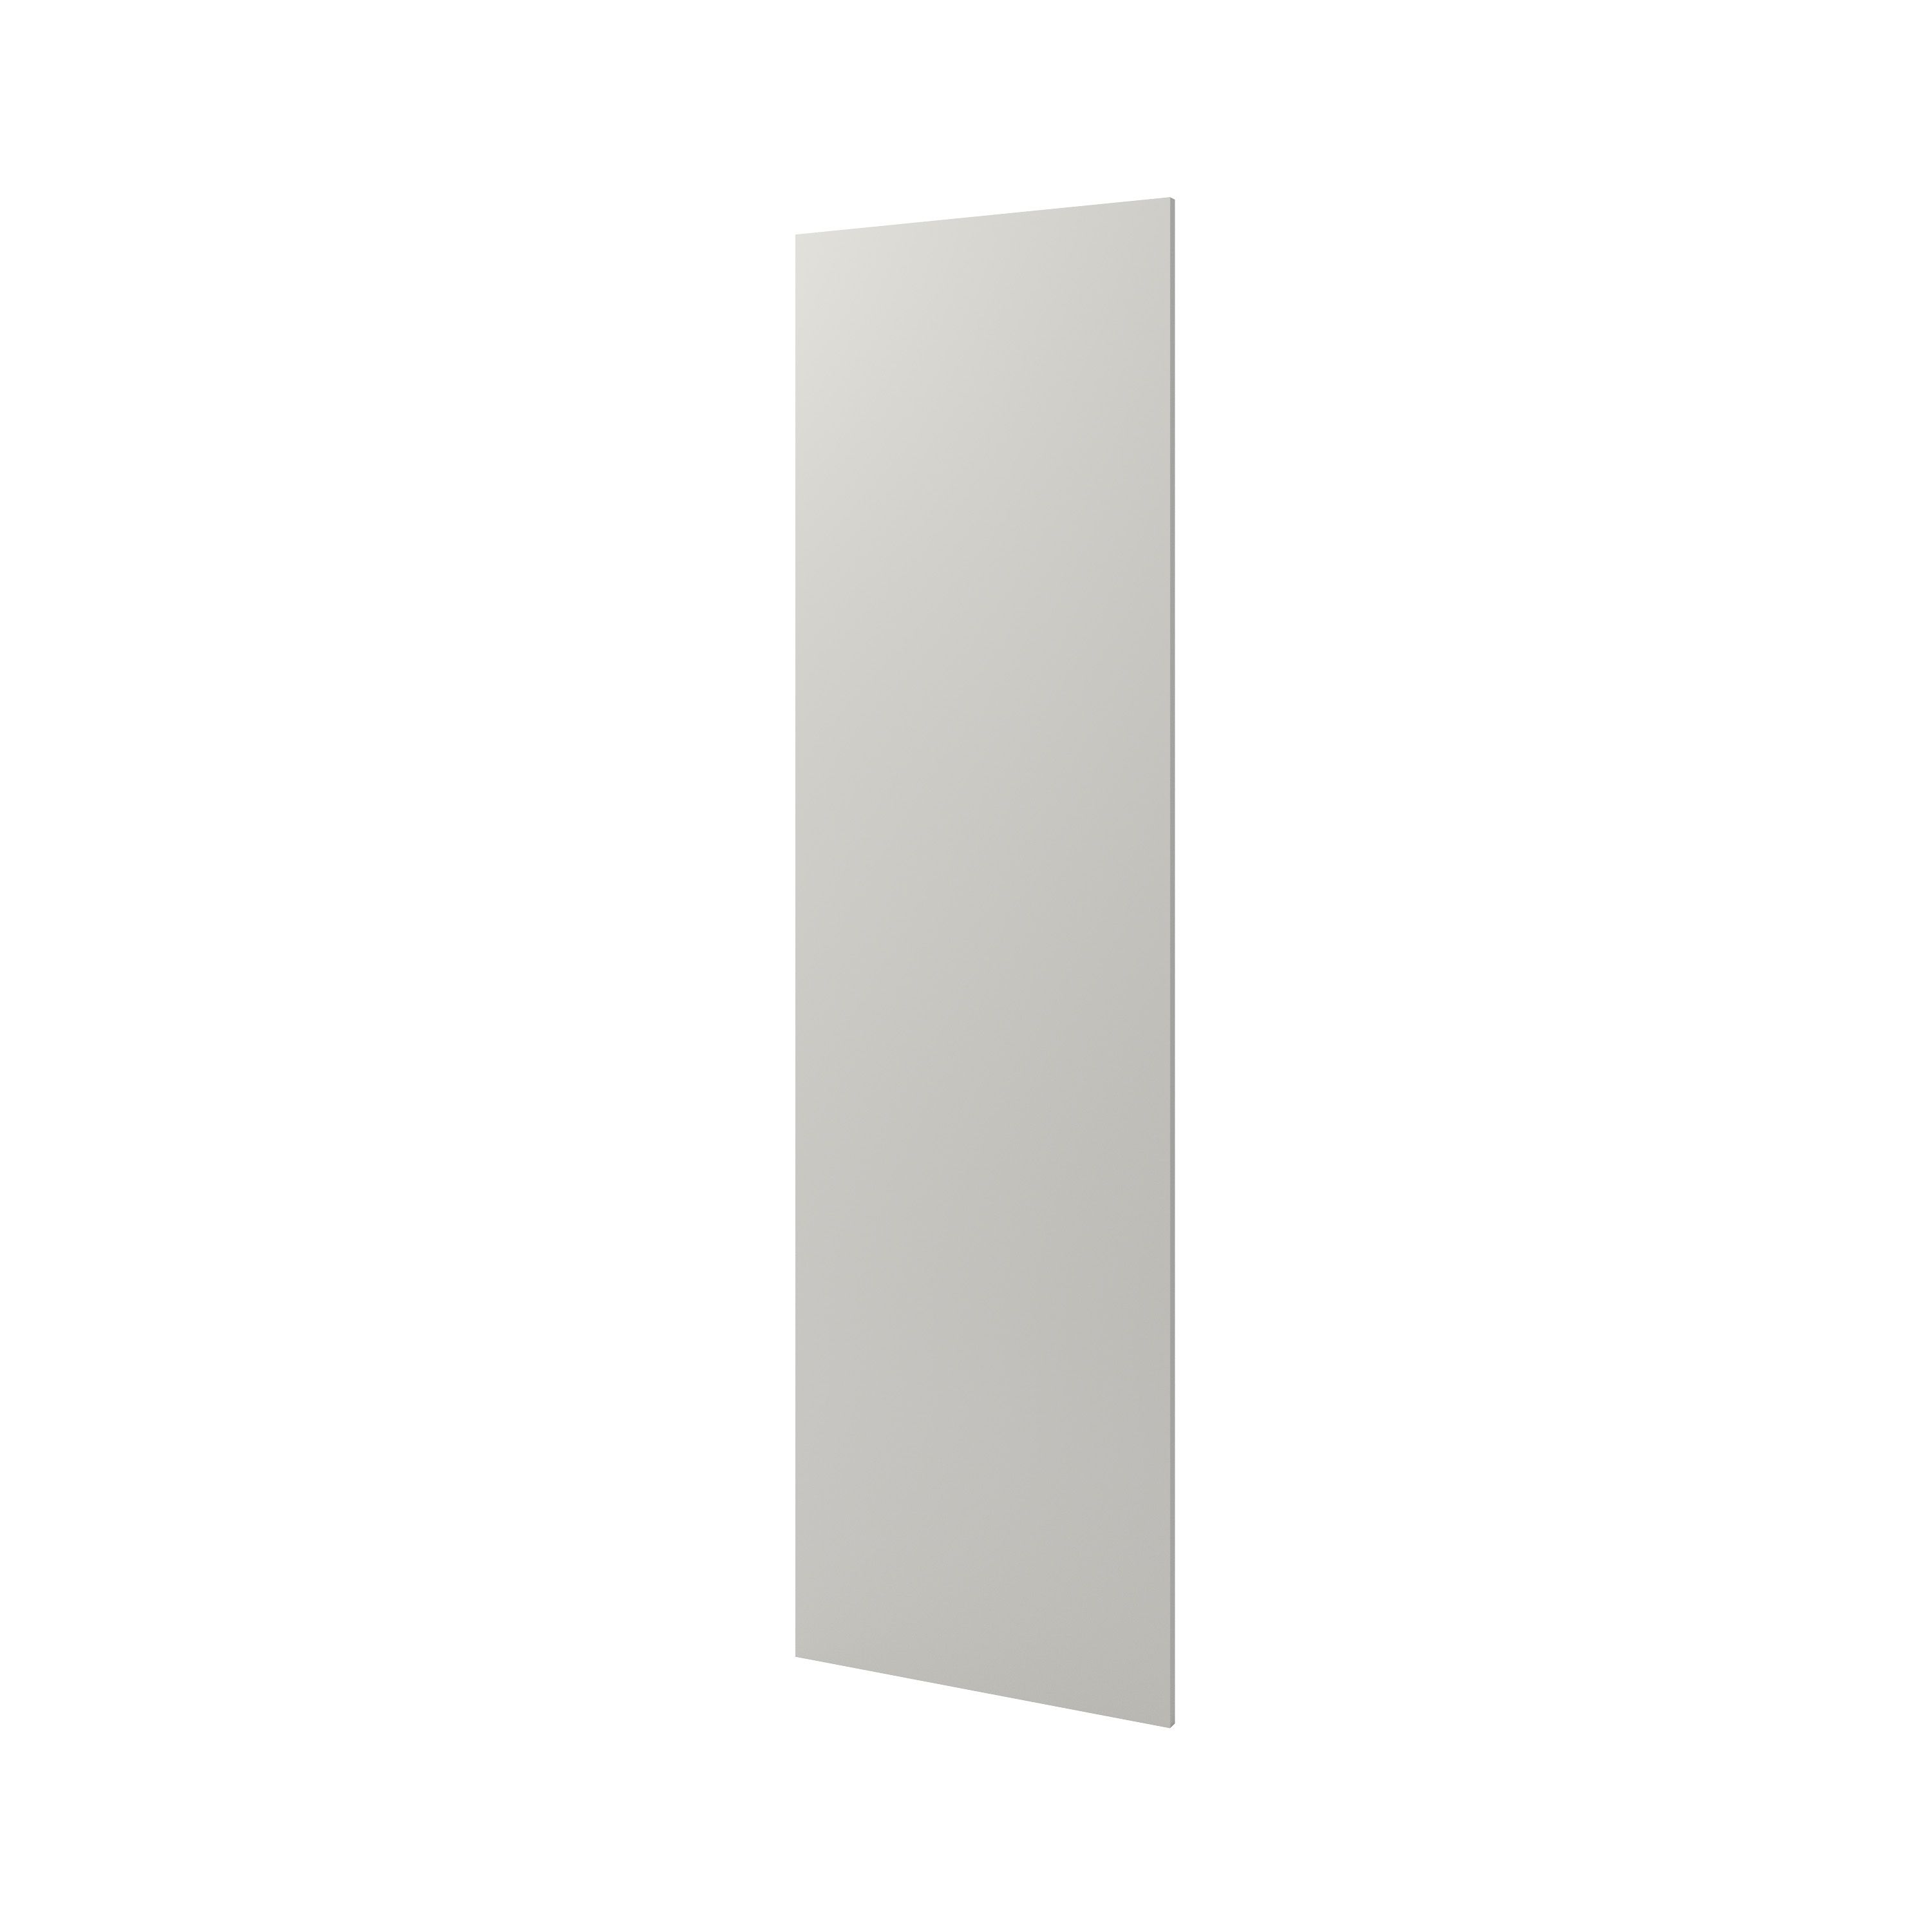 GoodHome Stevia Matt Pewter grey slab Standard End panel (H)2010mm (W)570mm, Pair